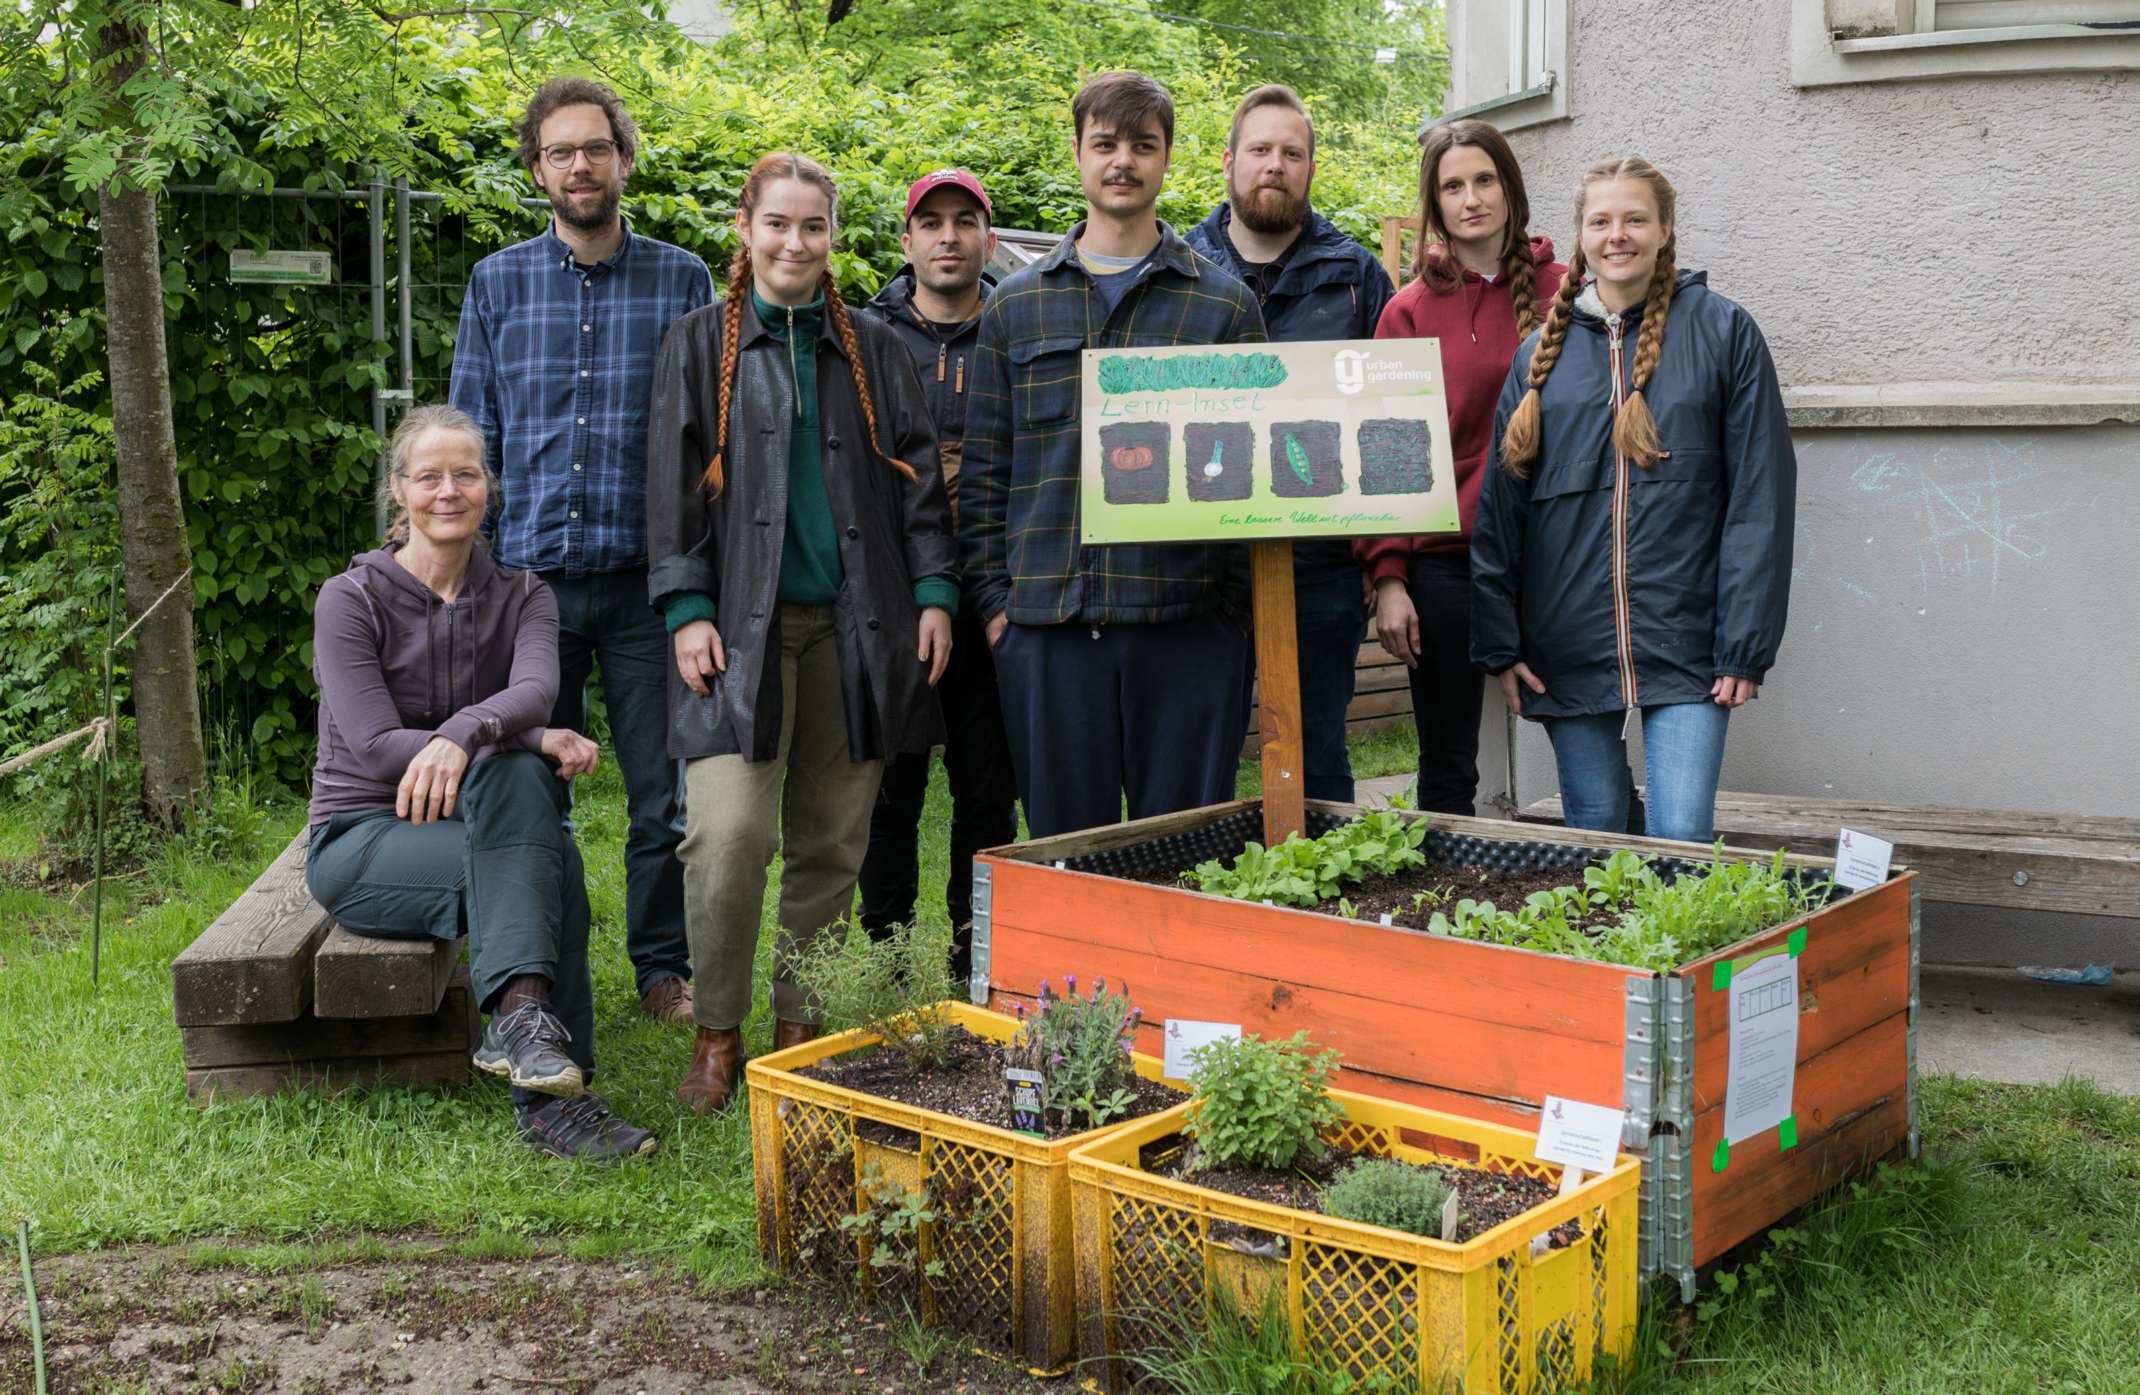 Studierendengruppe, die das Projekt &quot;Urban Gardening&quot; umgesetzt hat.